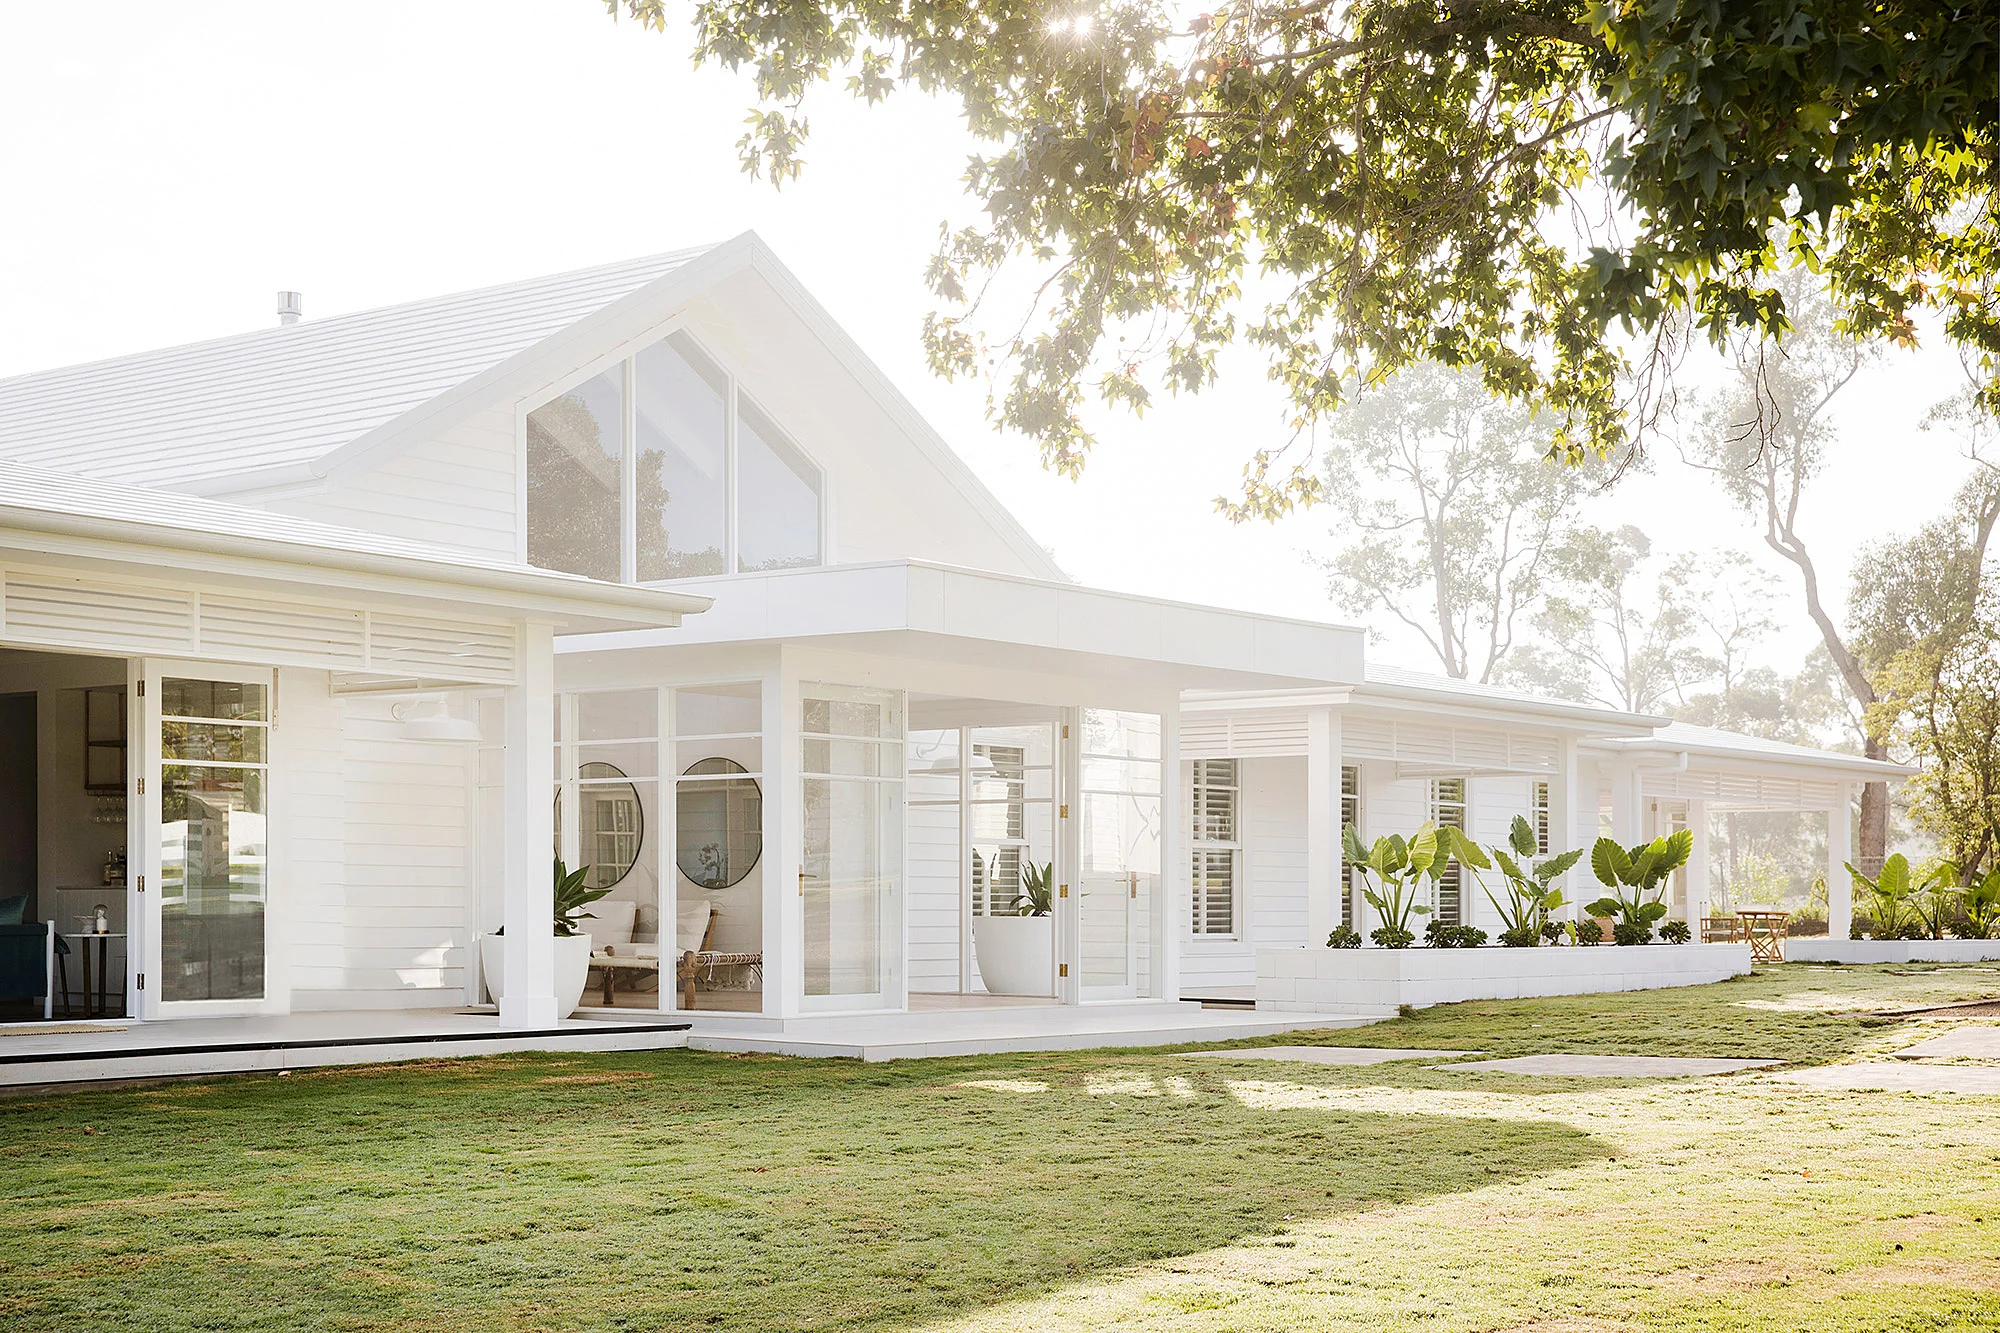 Australian Coastal meets Mediterranean villa - Making your Home Beautiful